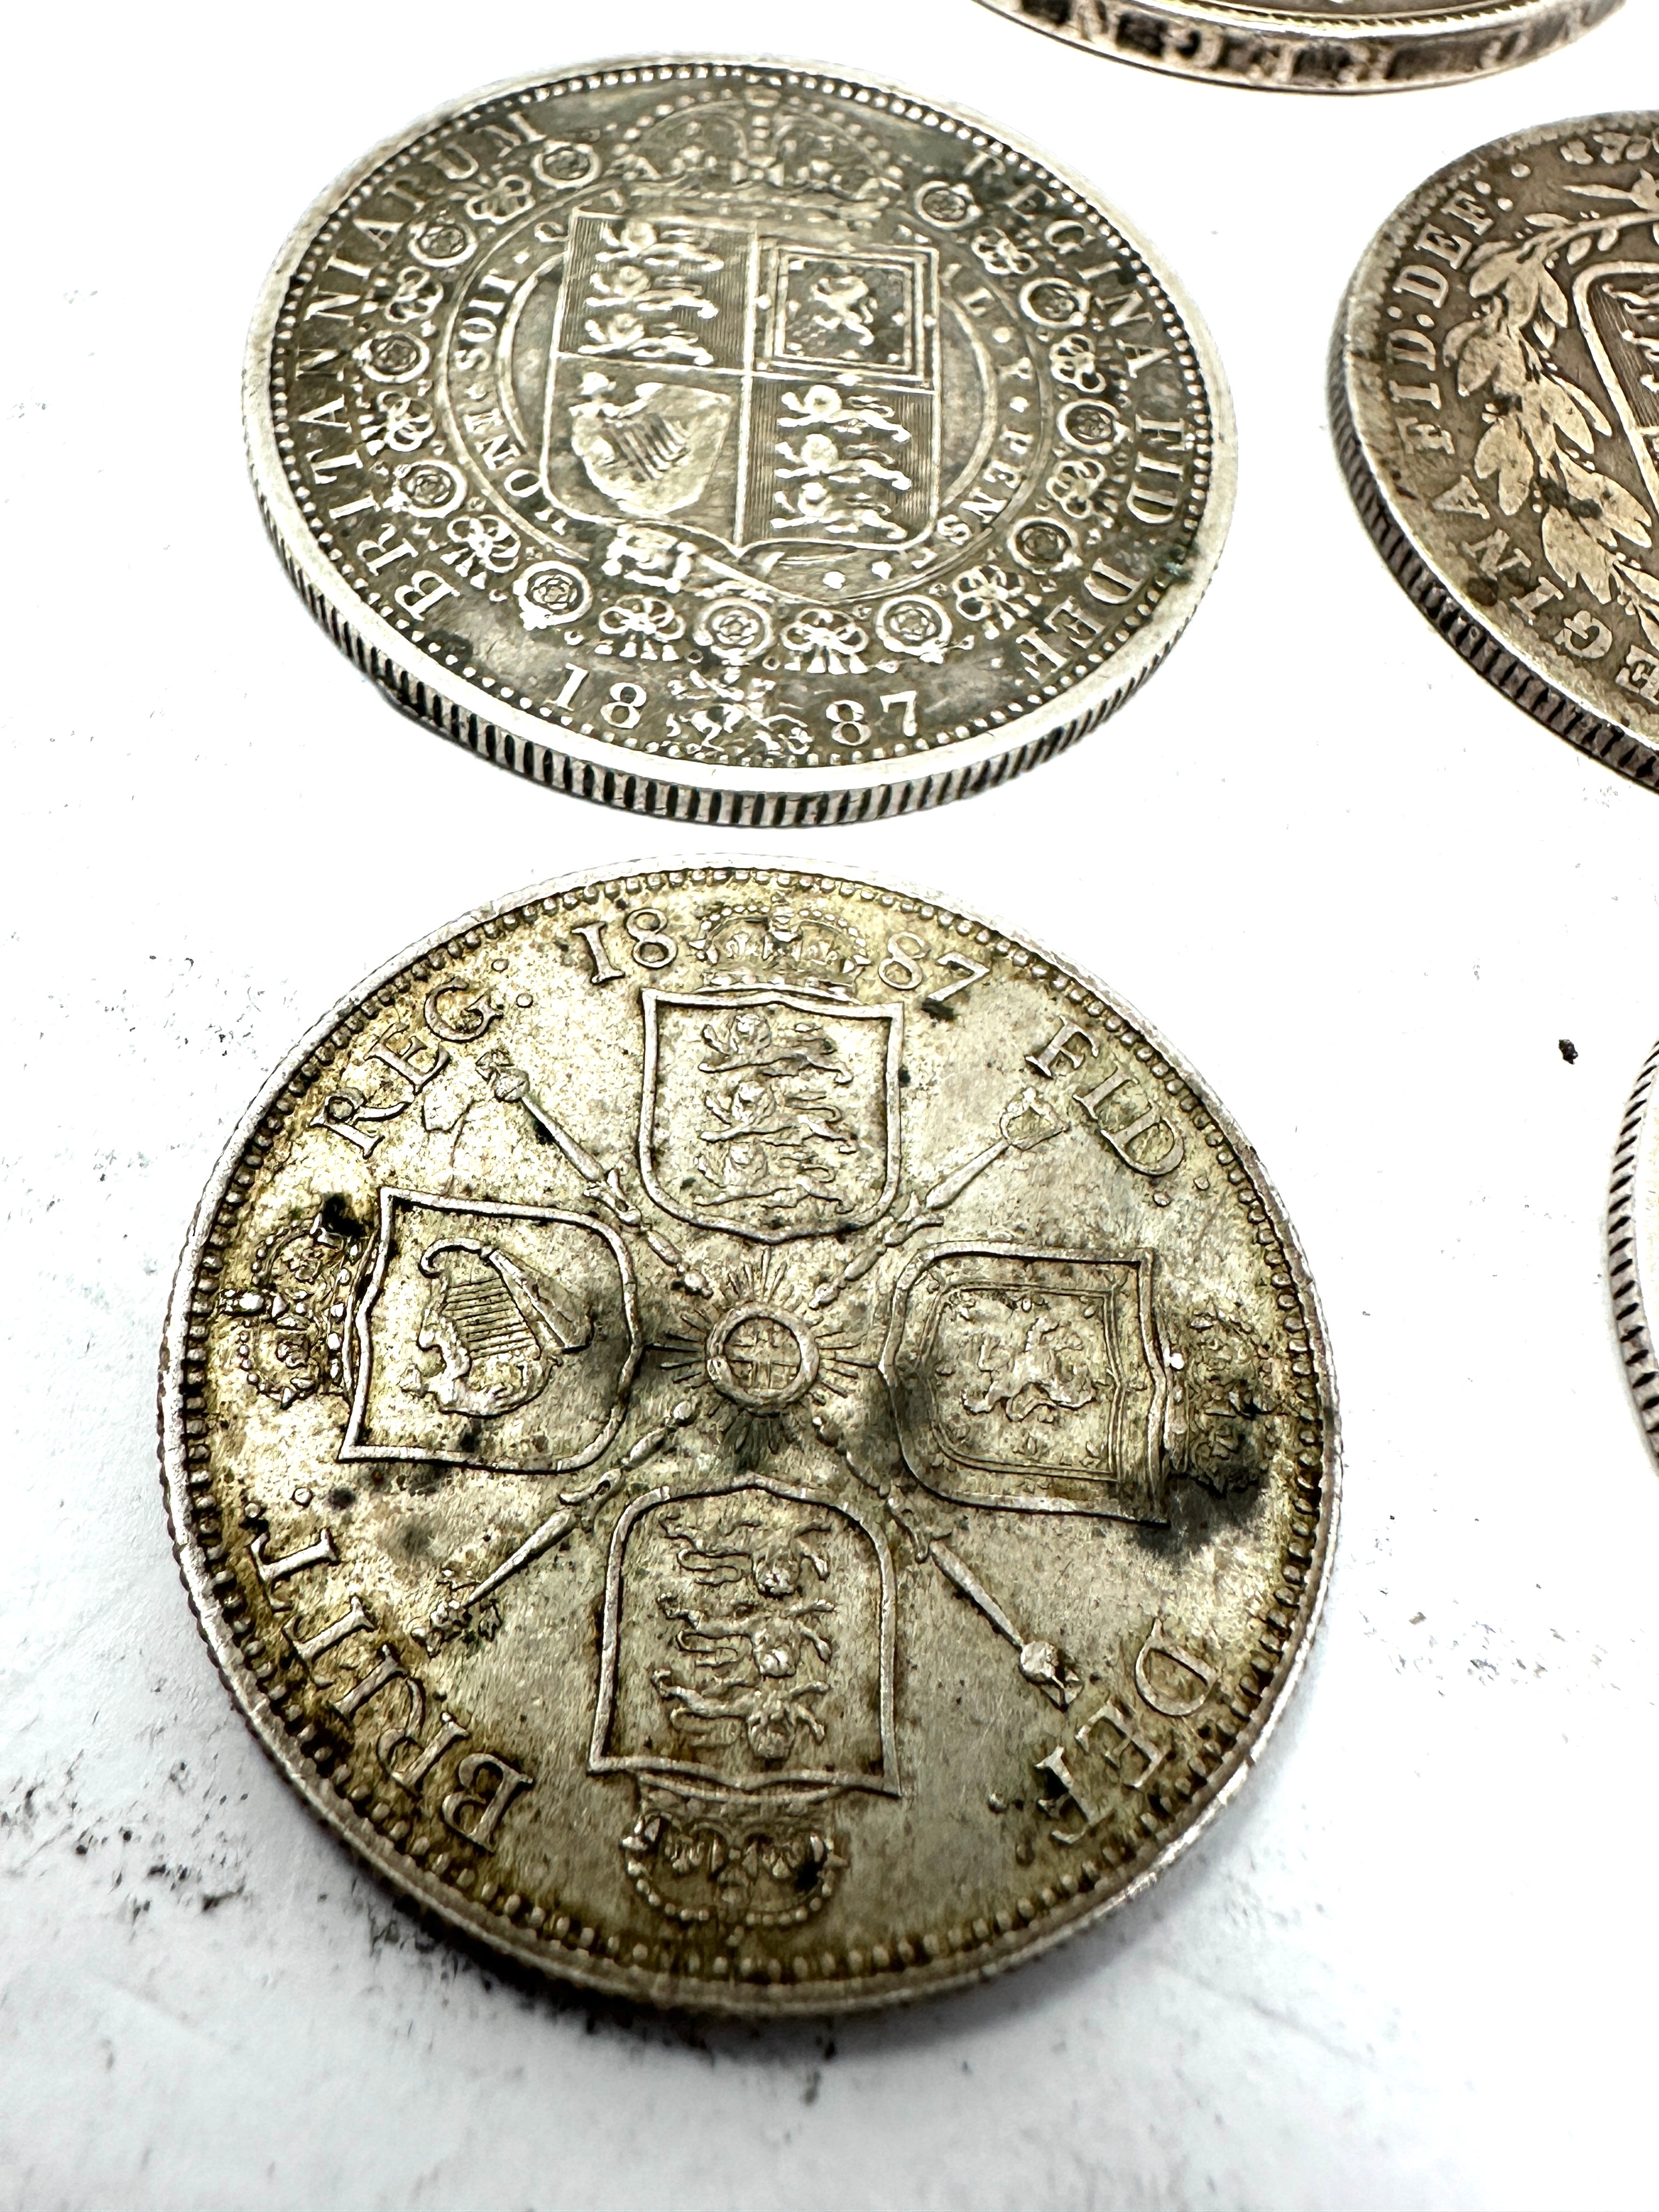 Victorian silver coins inc crown half crowns & florins - Image 6 of 6